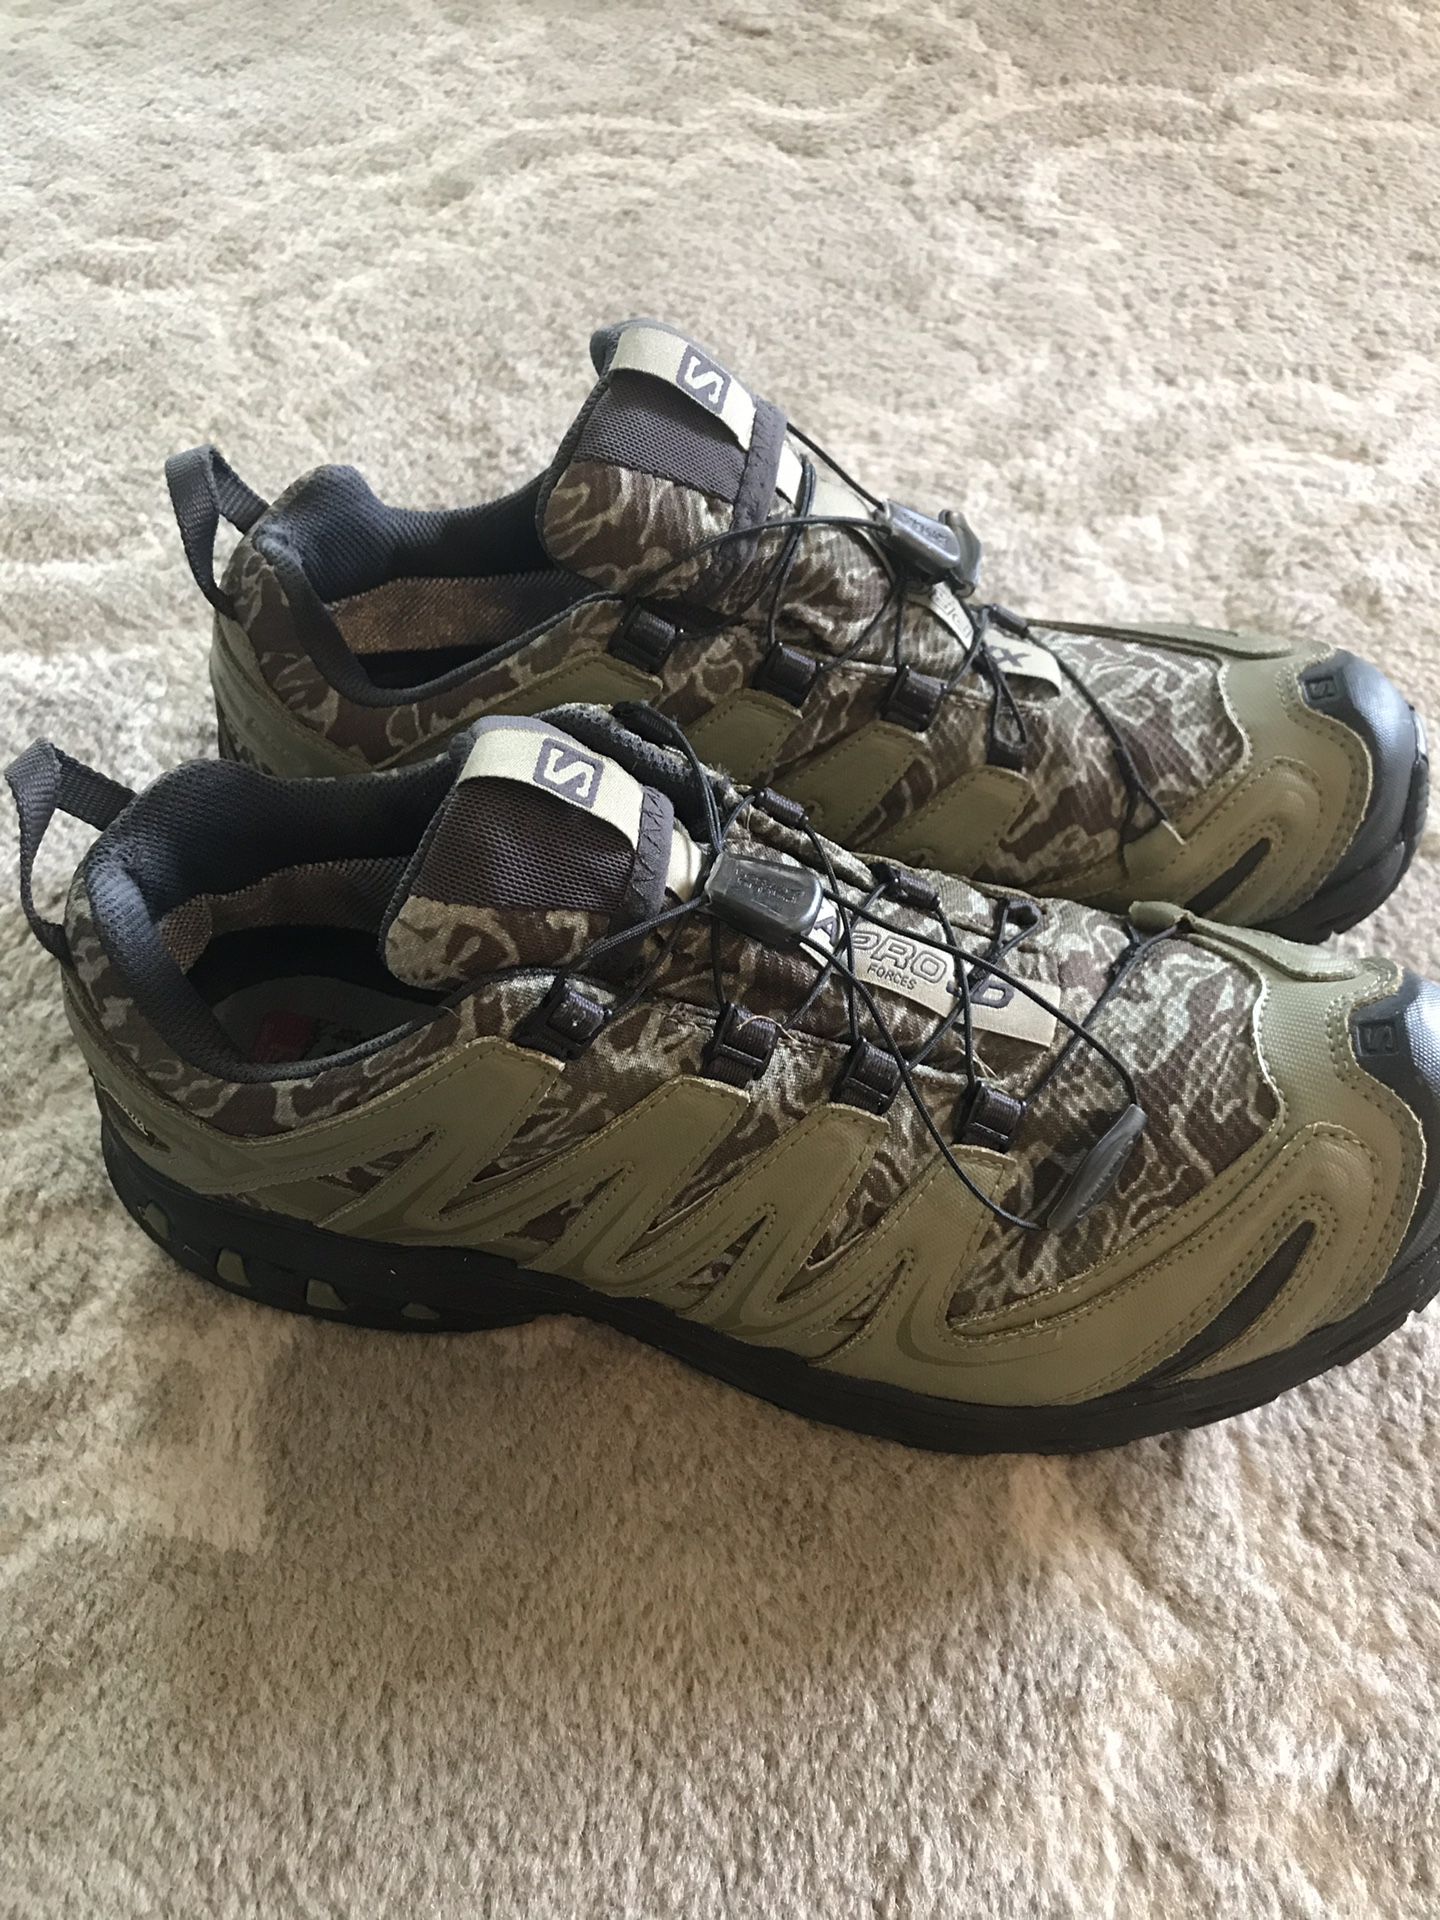 Salomon XA Pro Goretex low-top boots/trail running shoes